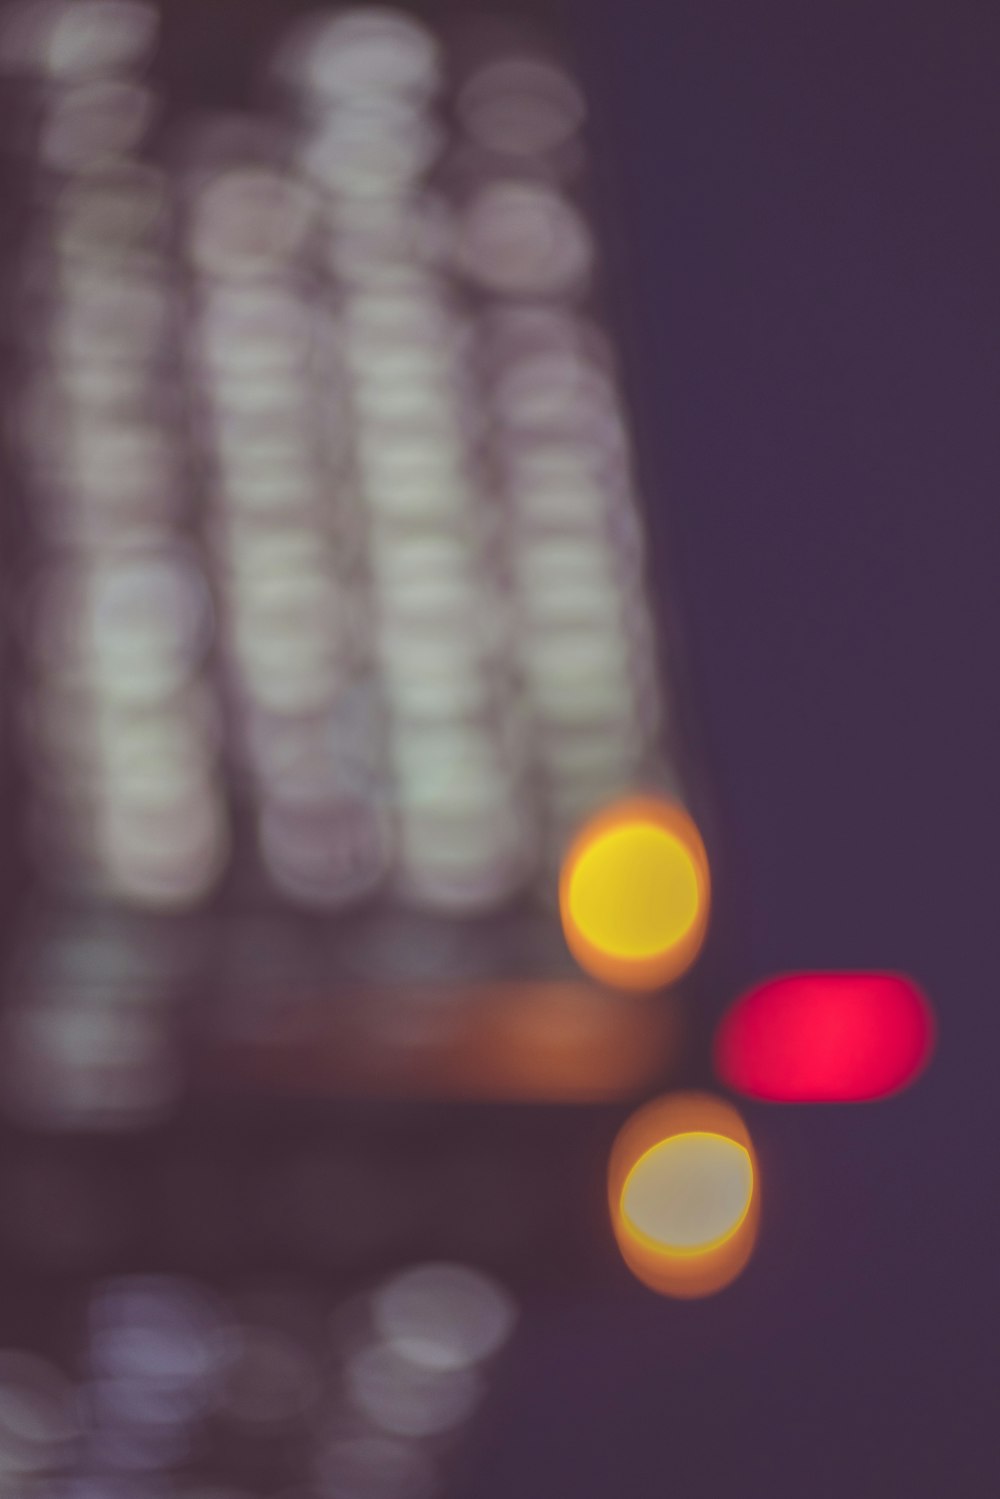 a blurry photo of a traffic light